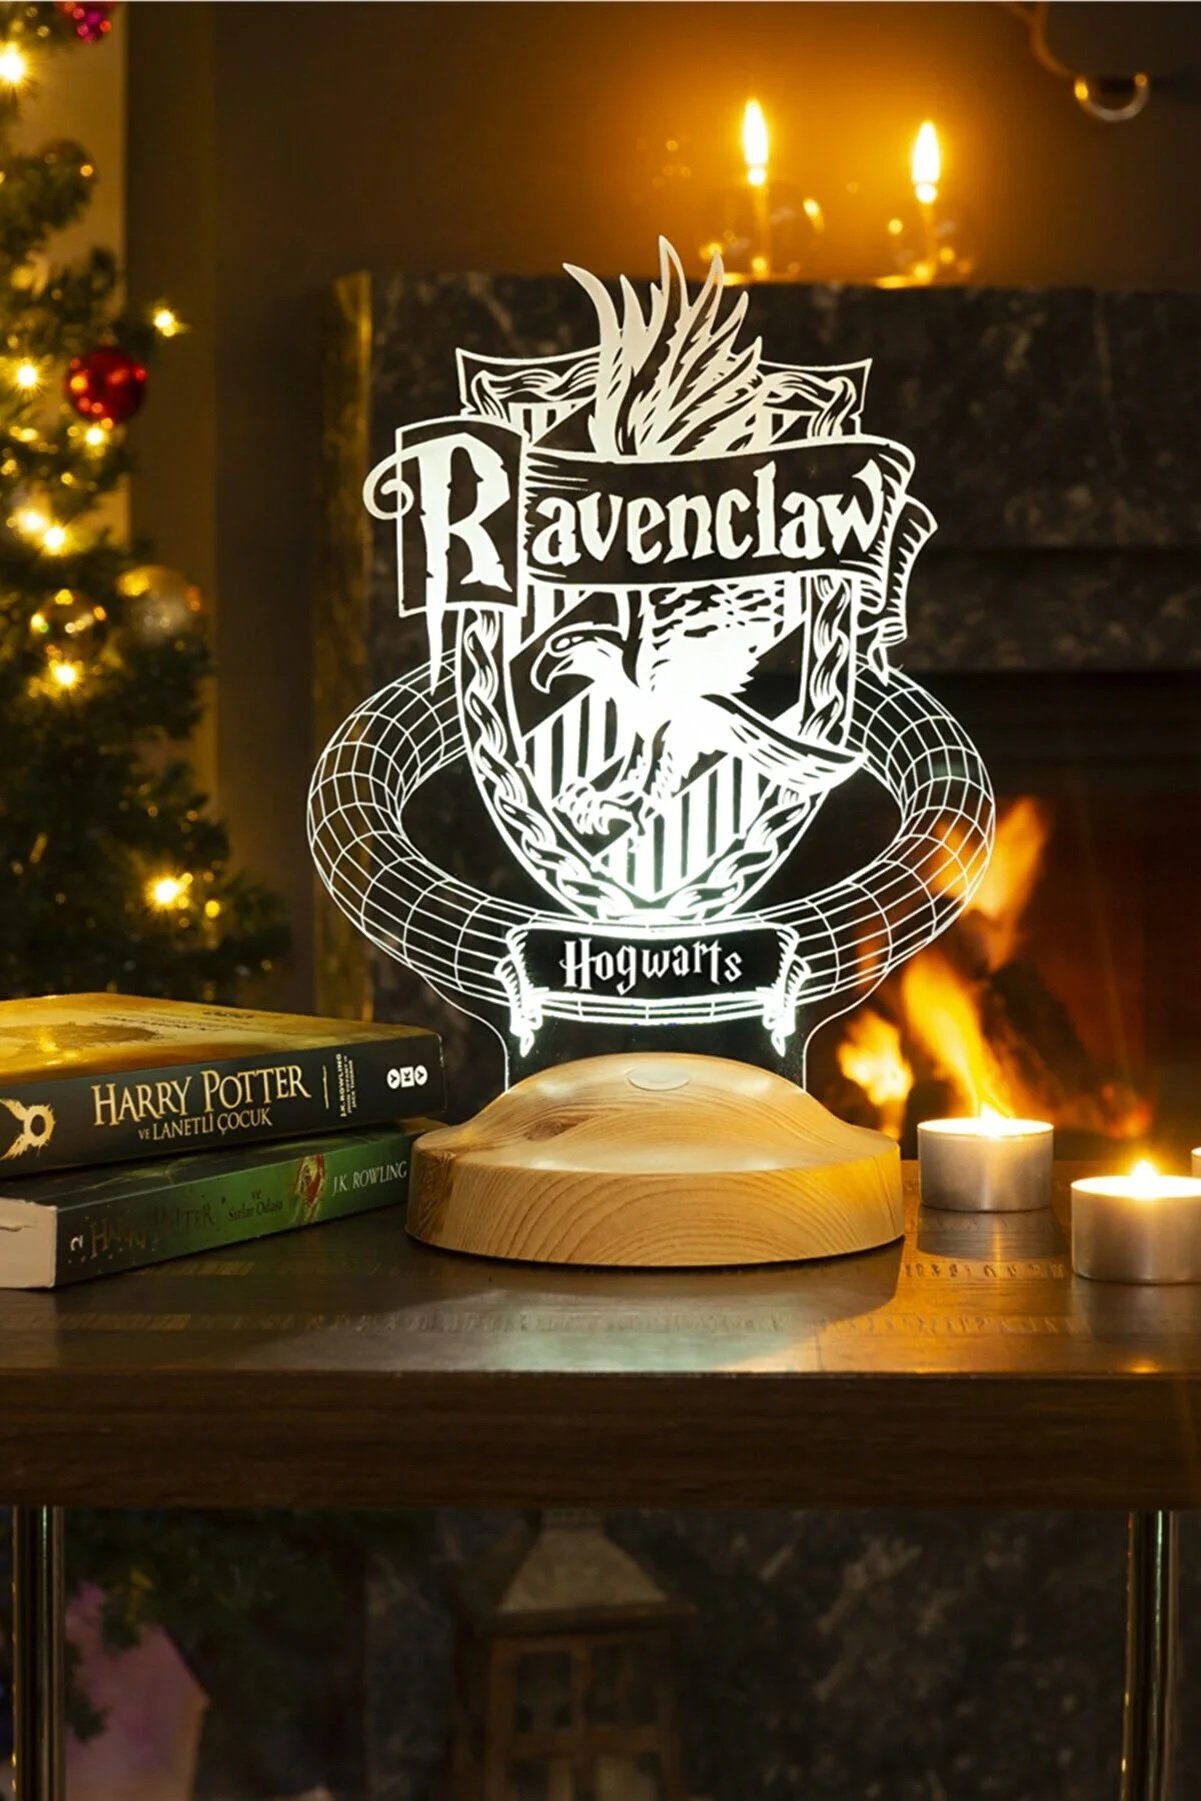 Geschenkelampe LED Nachttischlampe Ravenclaw Hogwarts Harry Potter LED-Nachtlicht Geschenke Lampe, LED fest integriert, 6 Farben